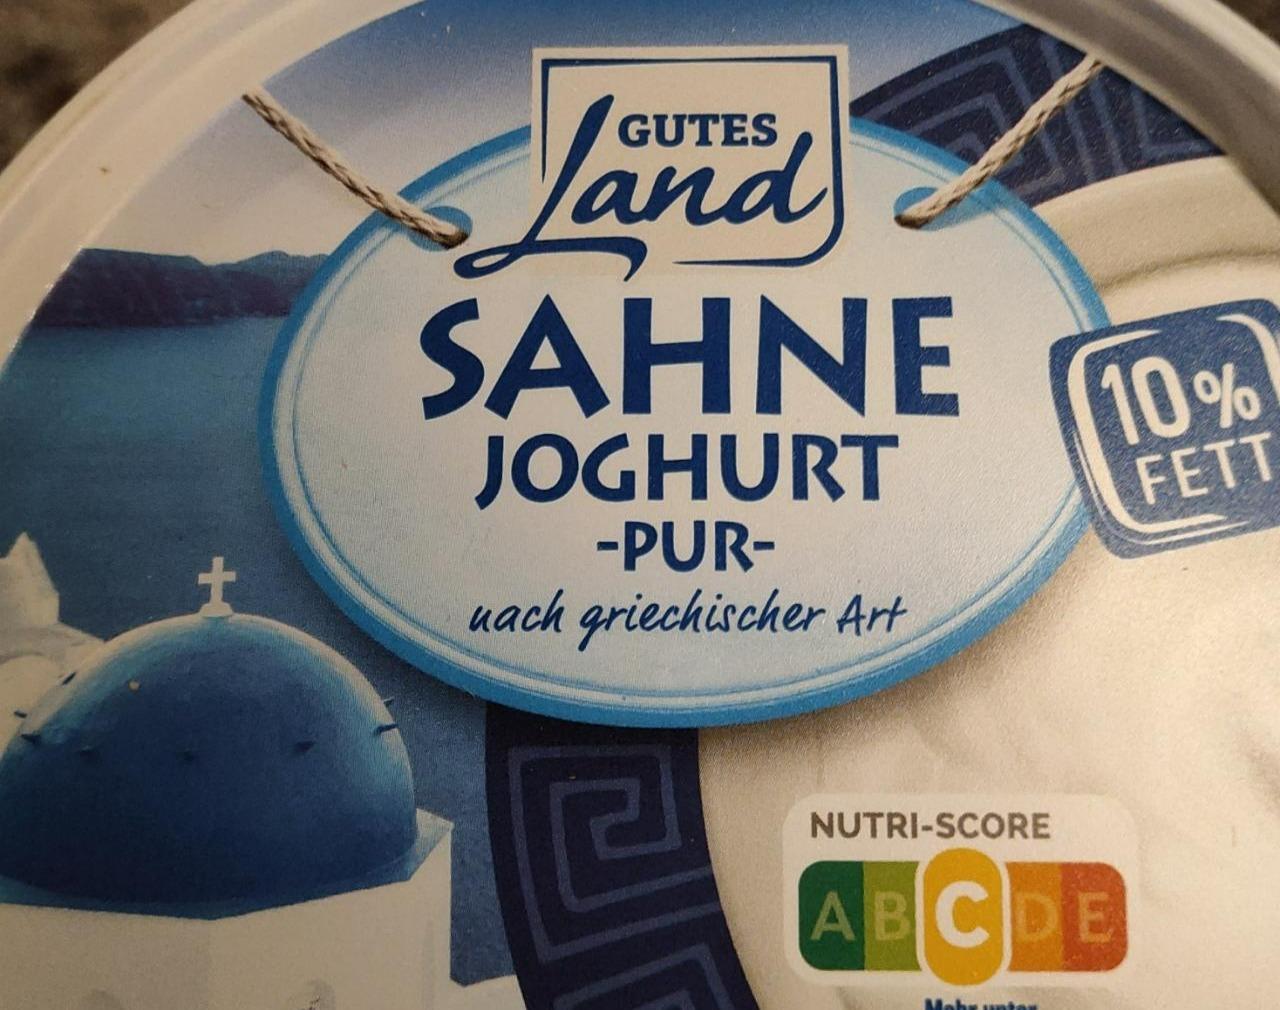 Fotografie - Sahne Joghurt pur nach griechischer Art 10% fett Gutes Land